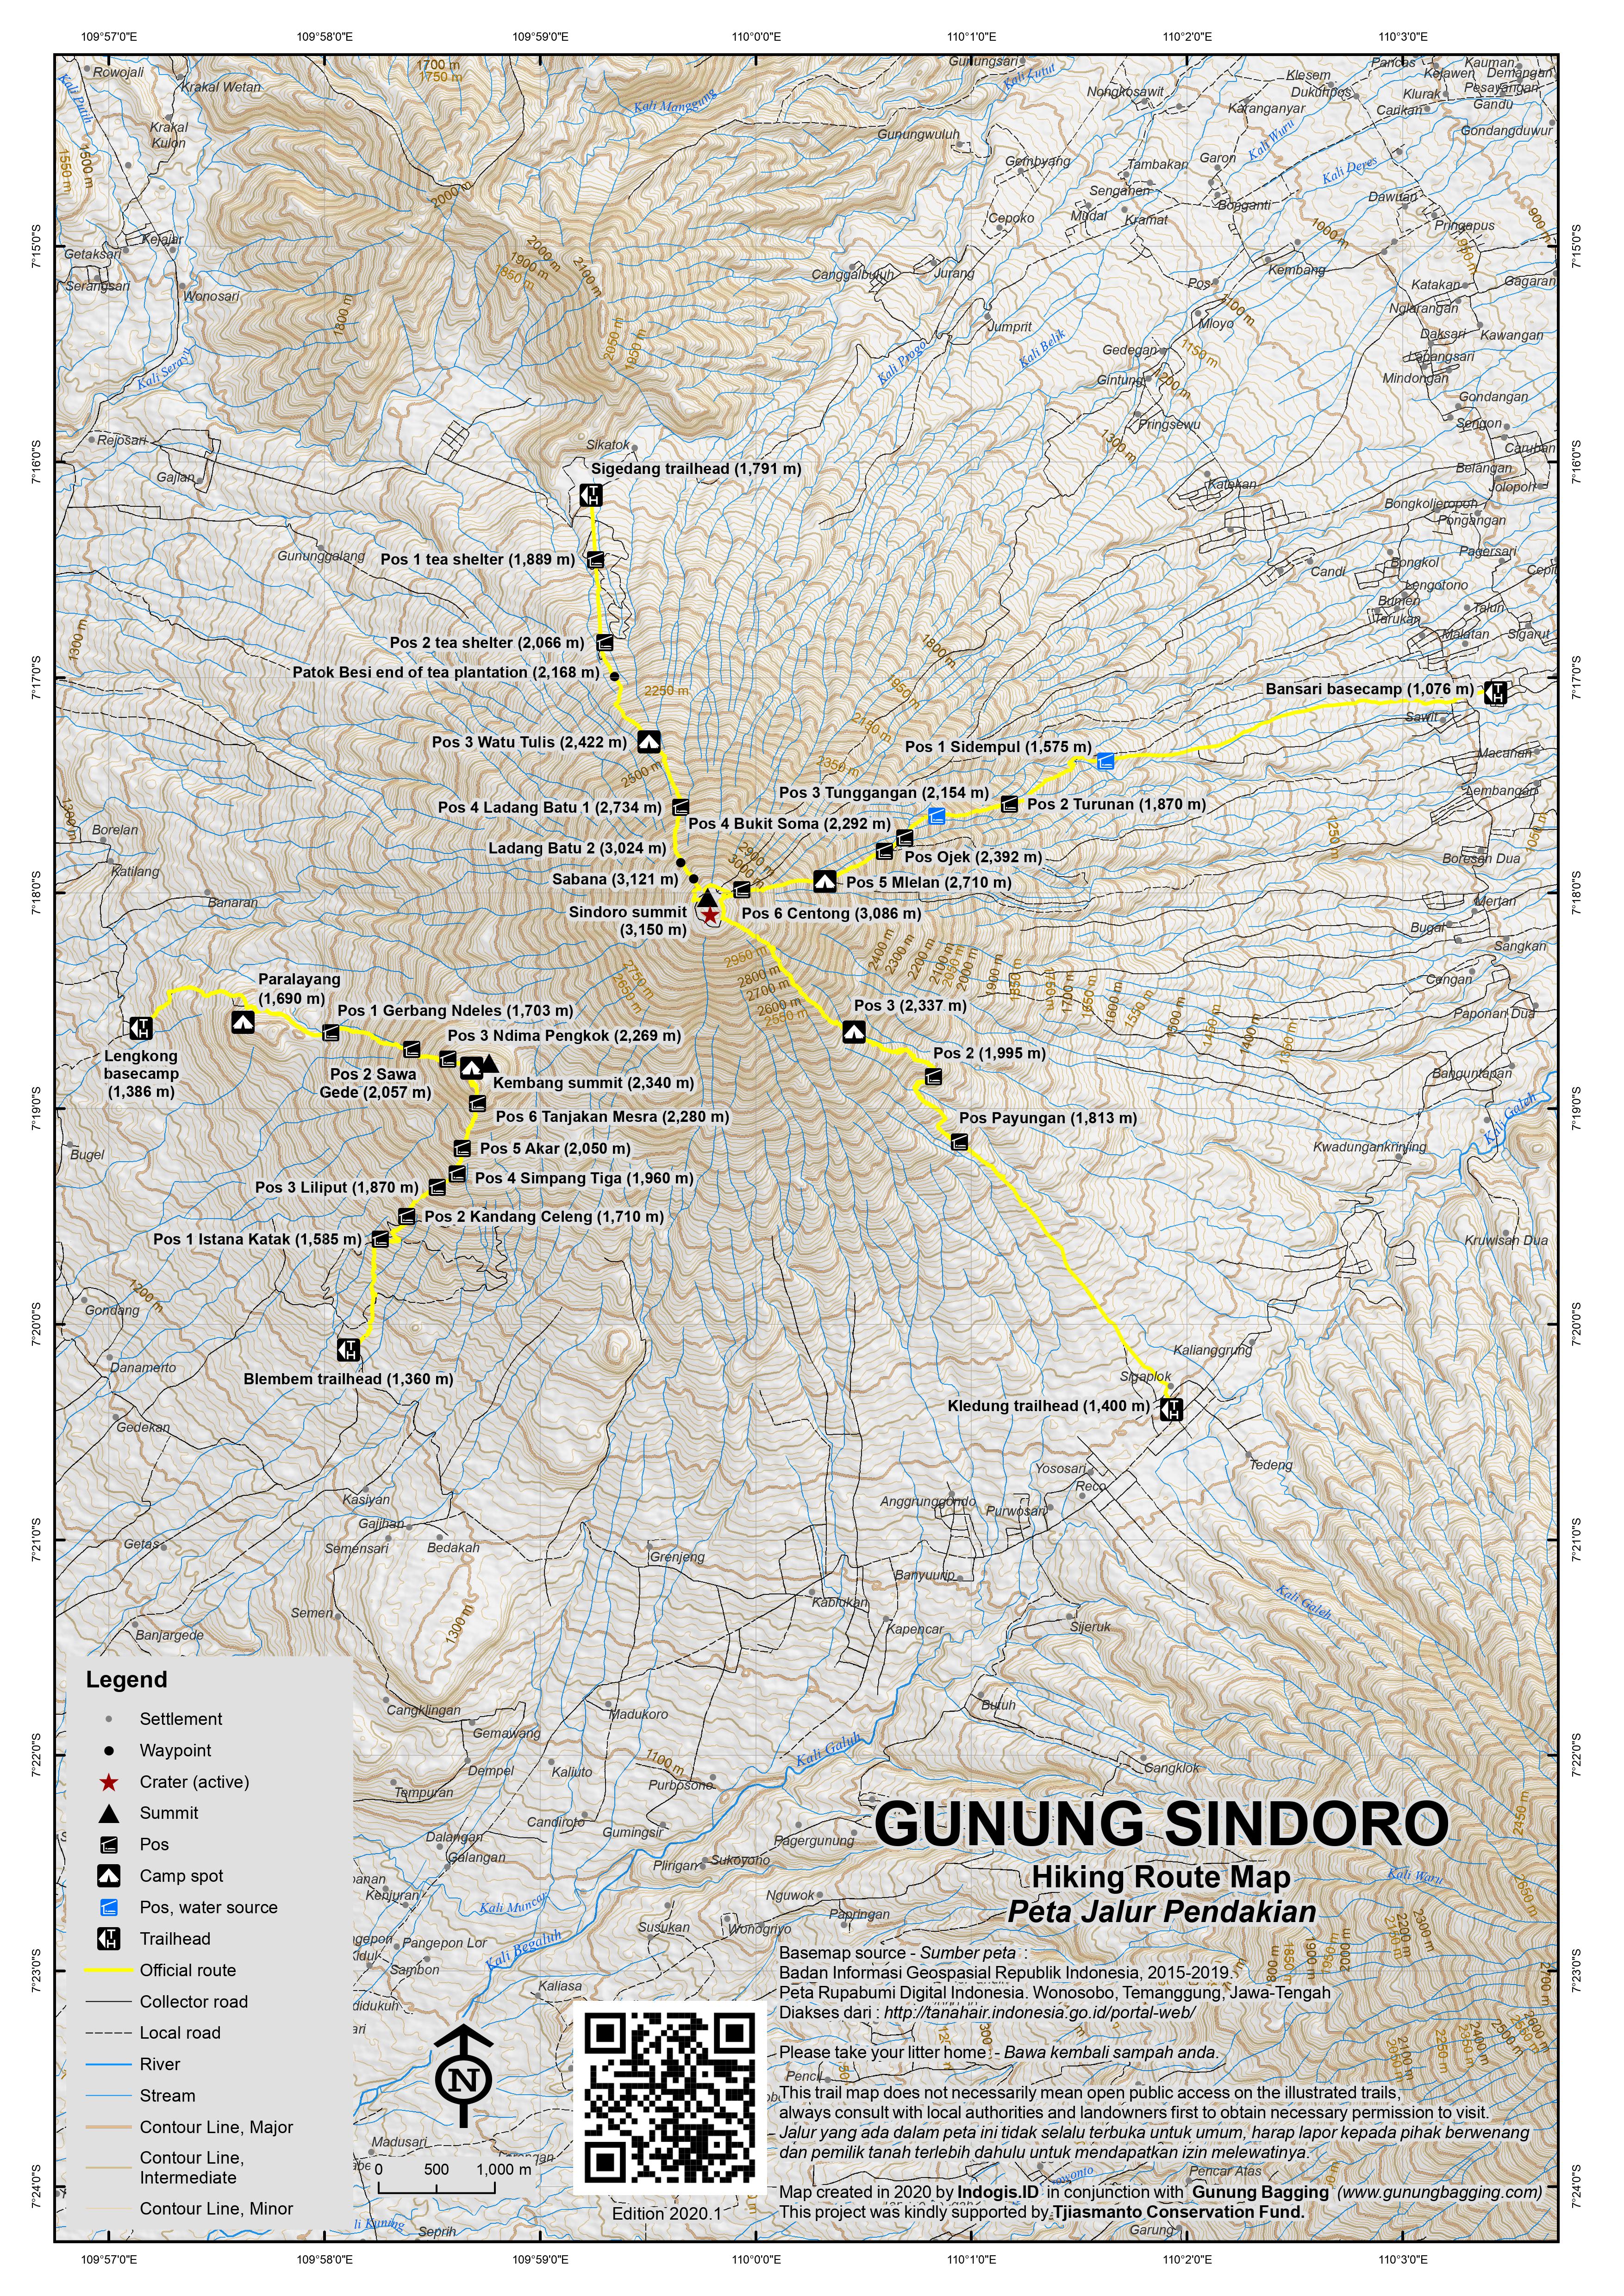 Peta Jalur Pendakian Gunung Sindoro